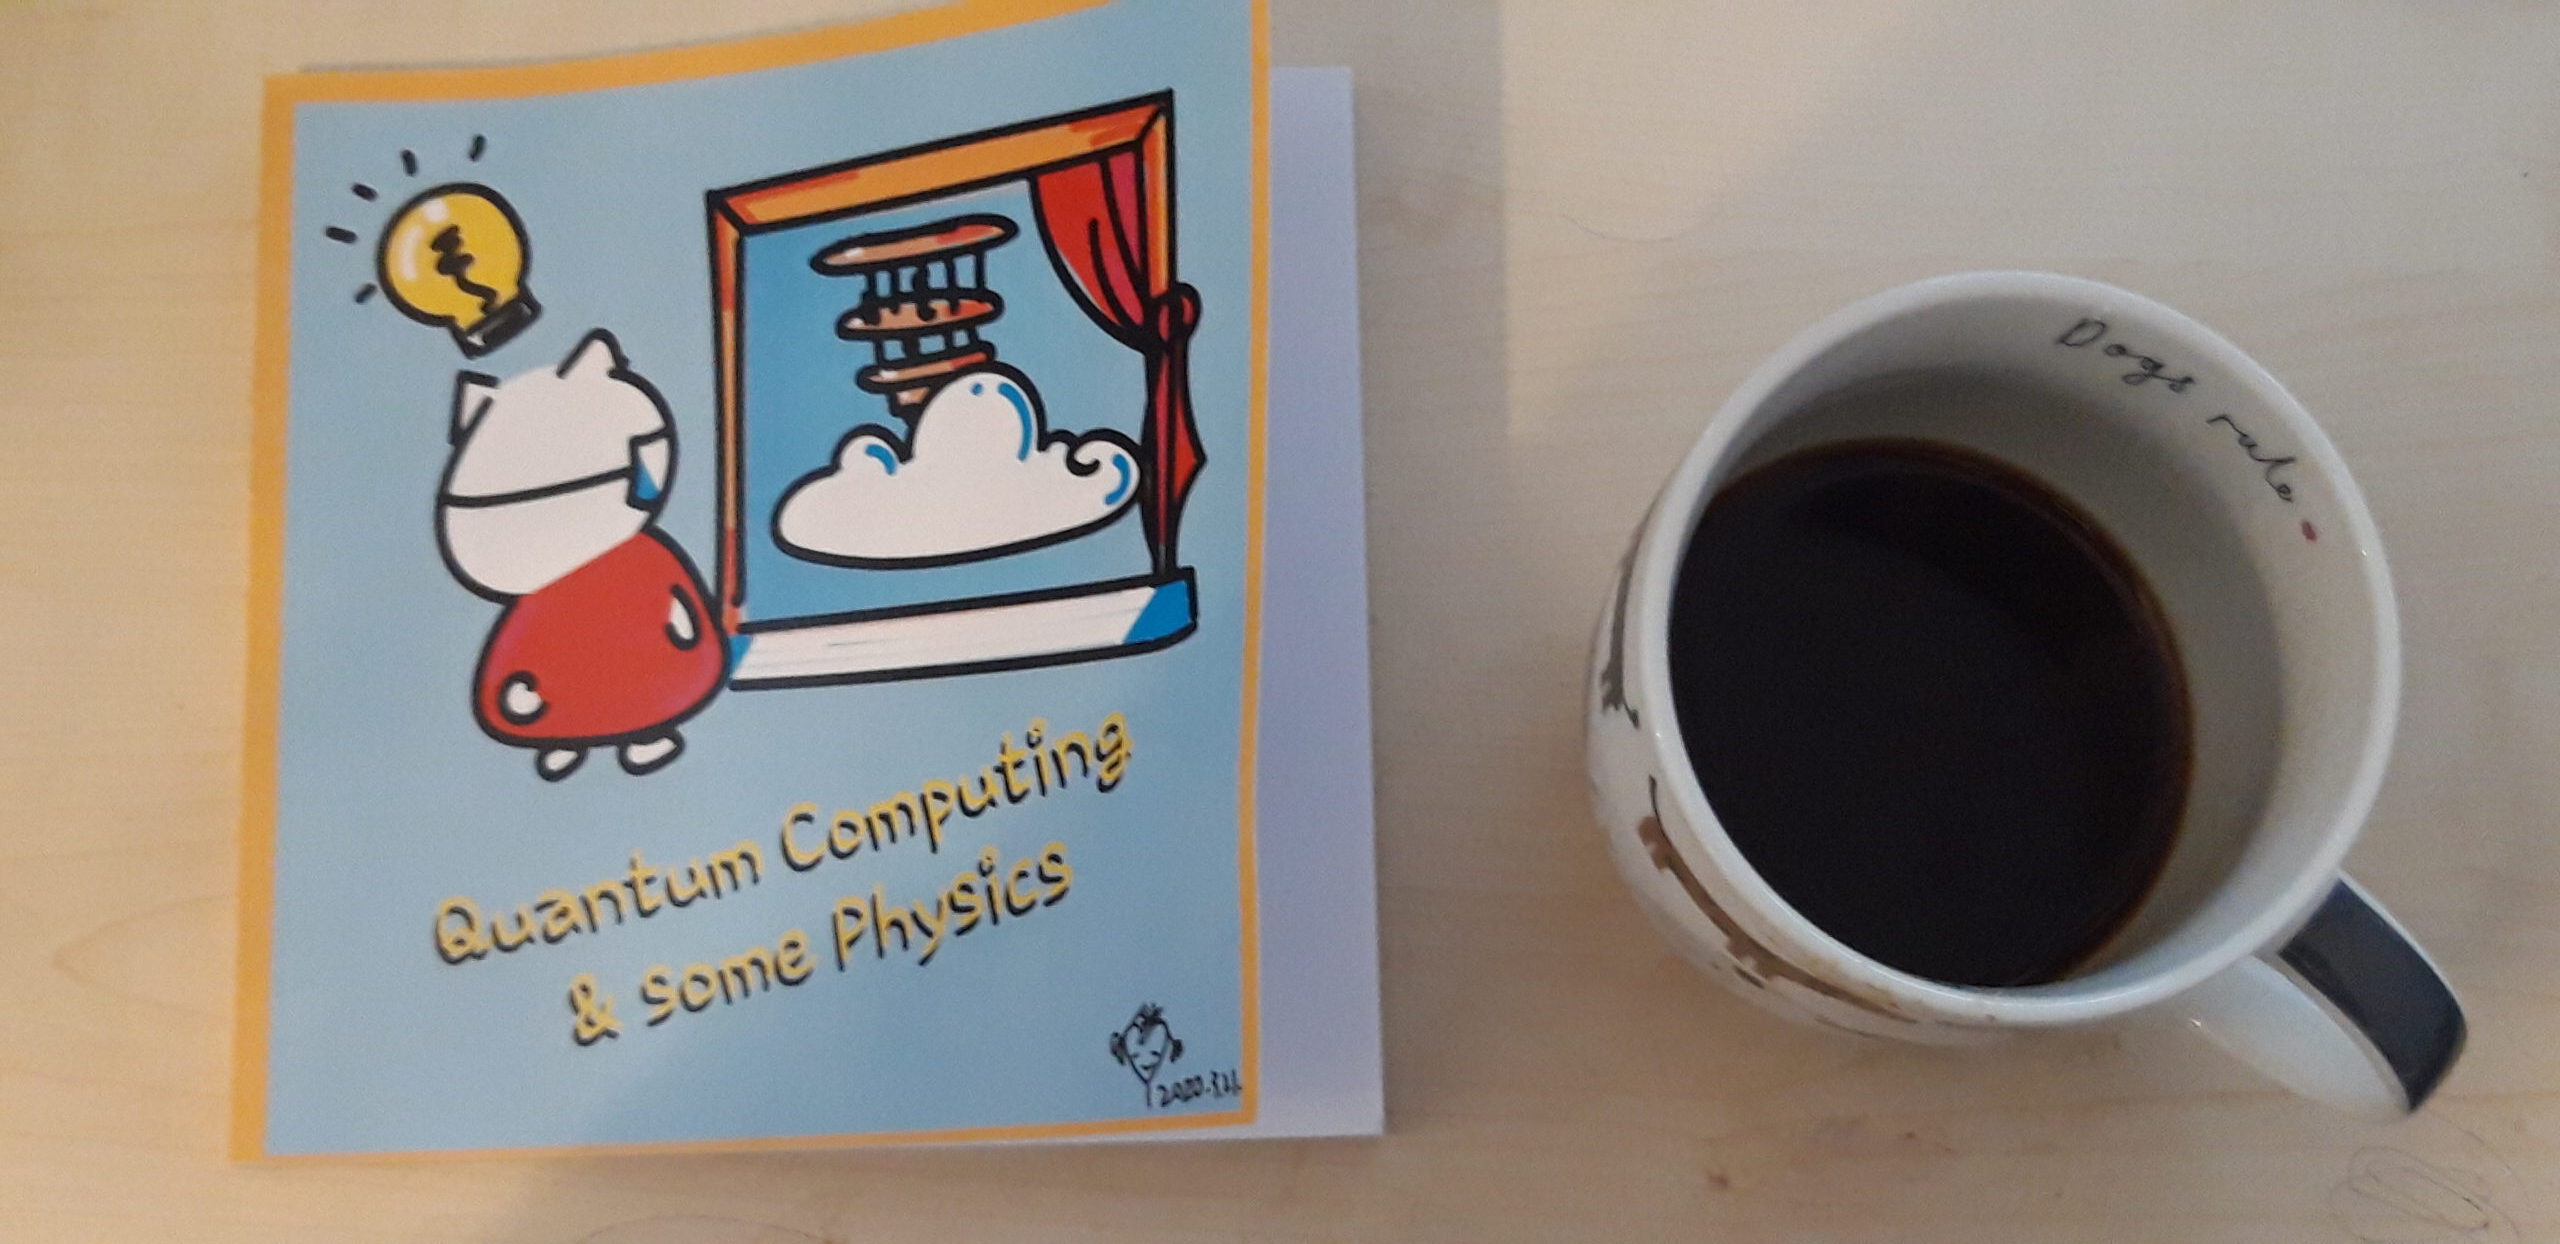 Quantum Computing & Some Physics: Learning Quantum Computing With Comics